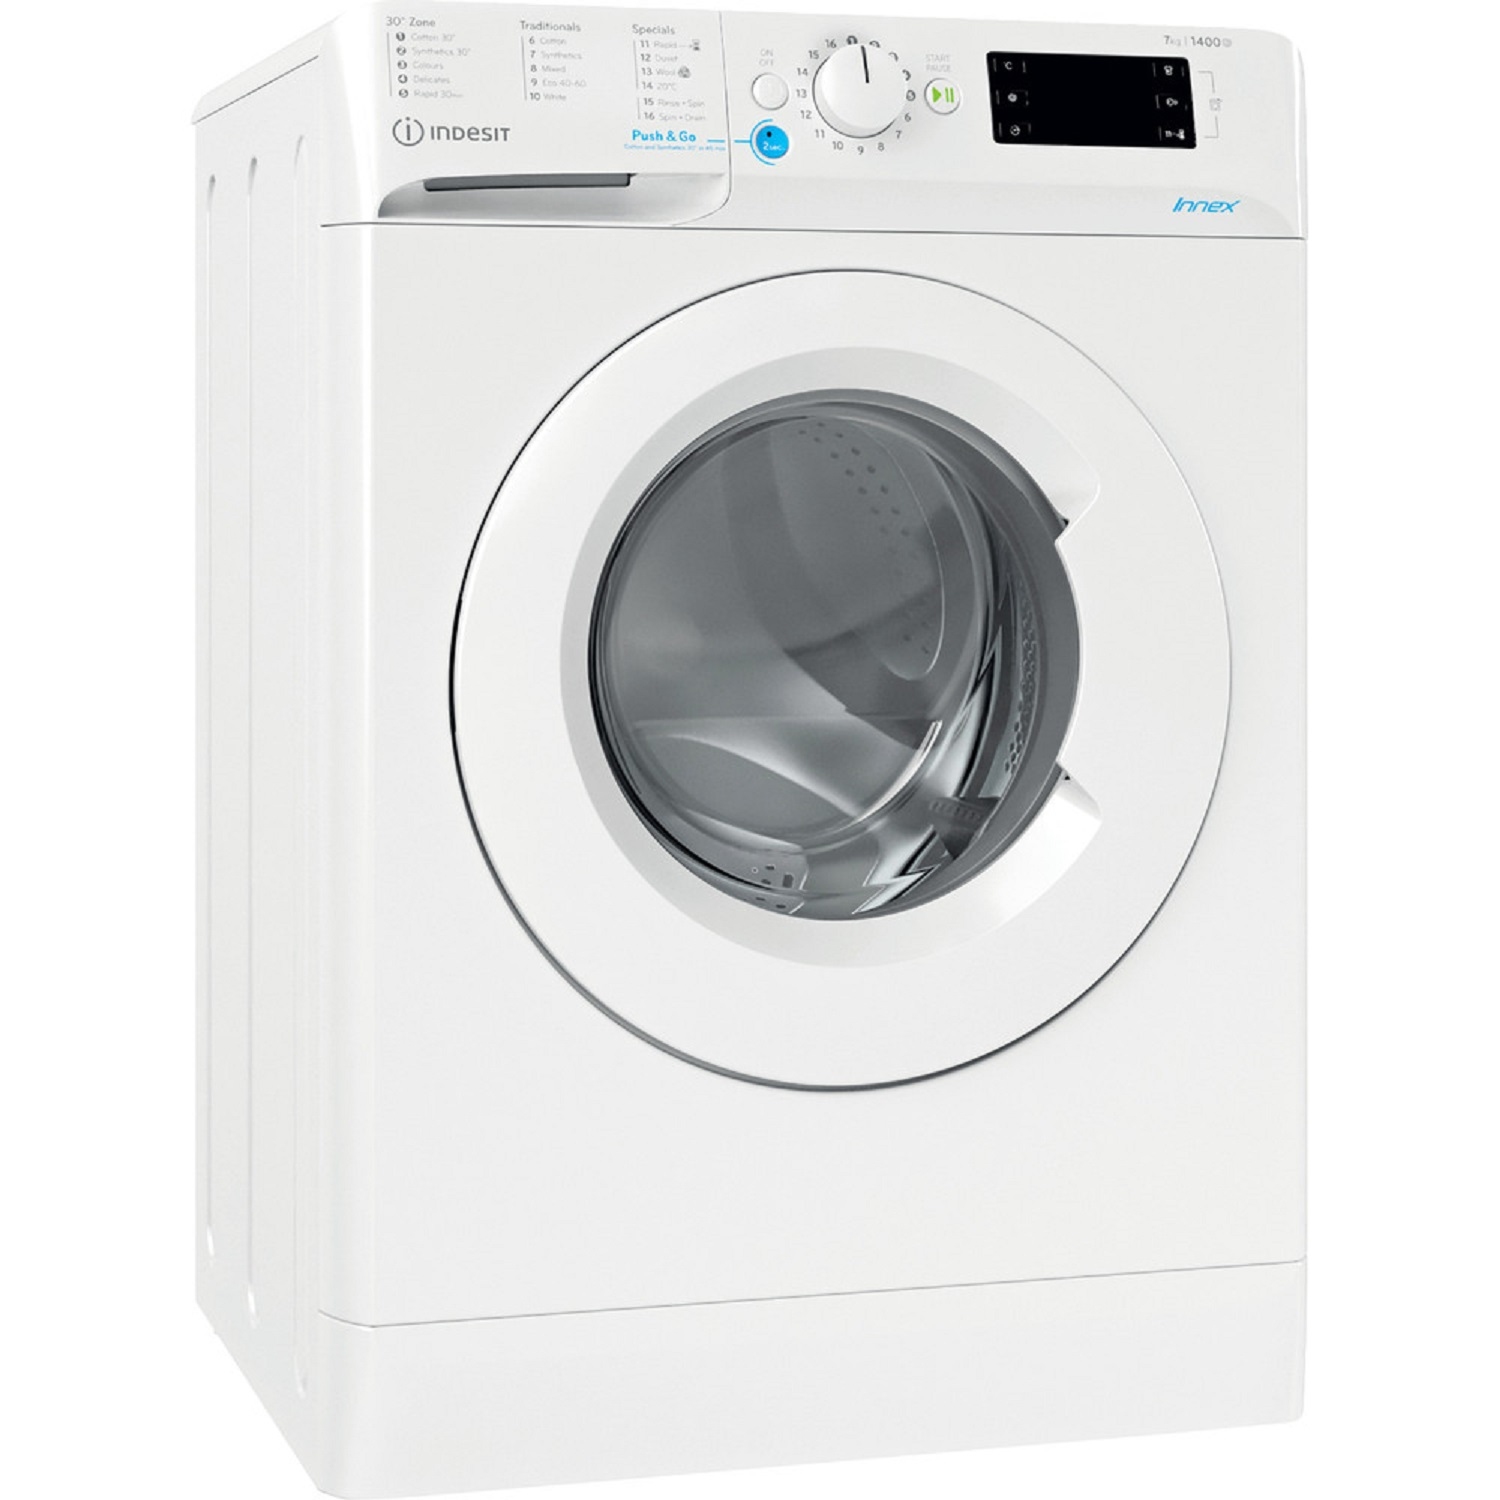 Indesit Innex 'Push & Go' Washing Machine 7kg White 1400 Spin - 2